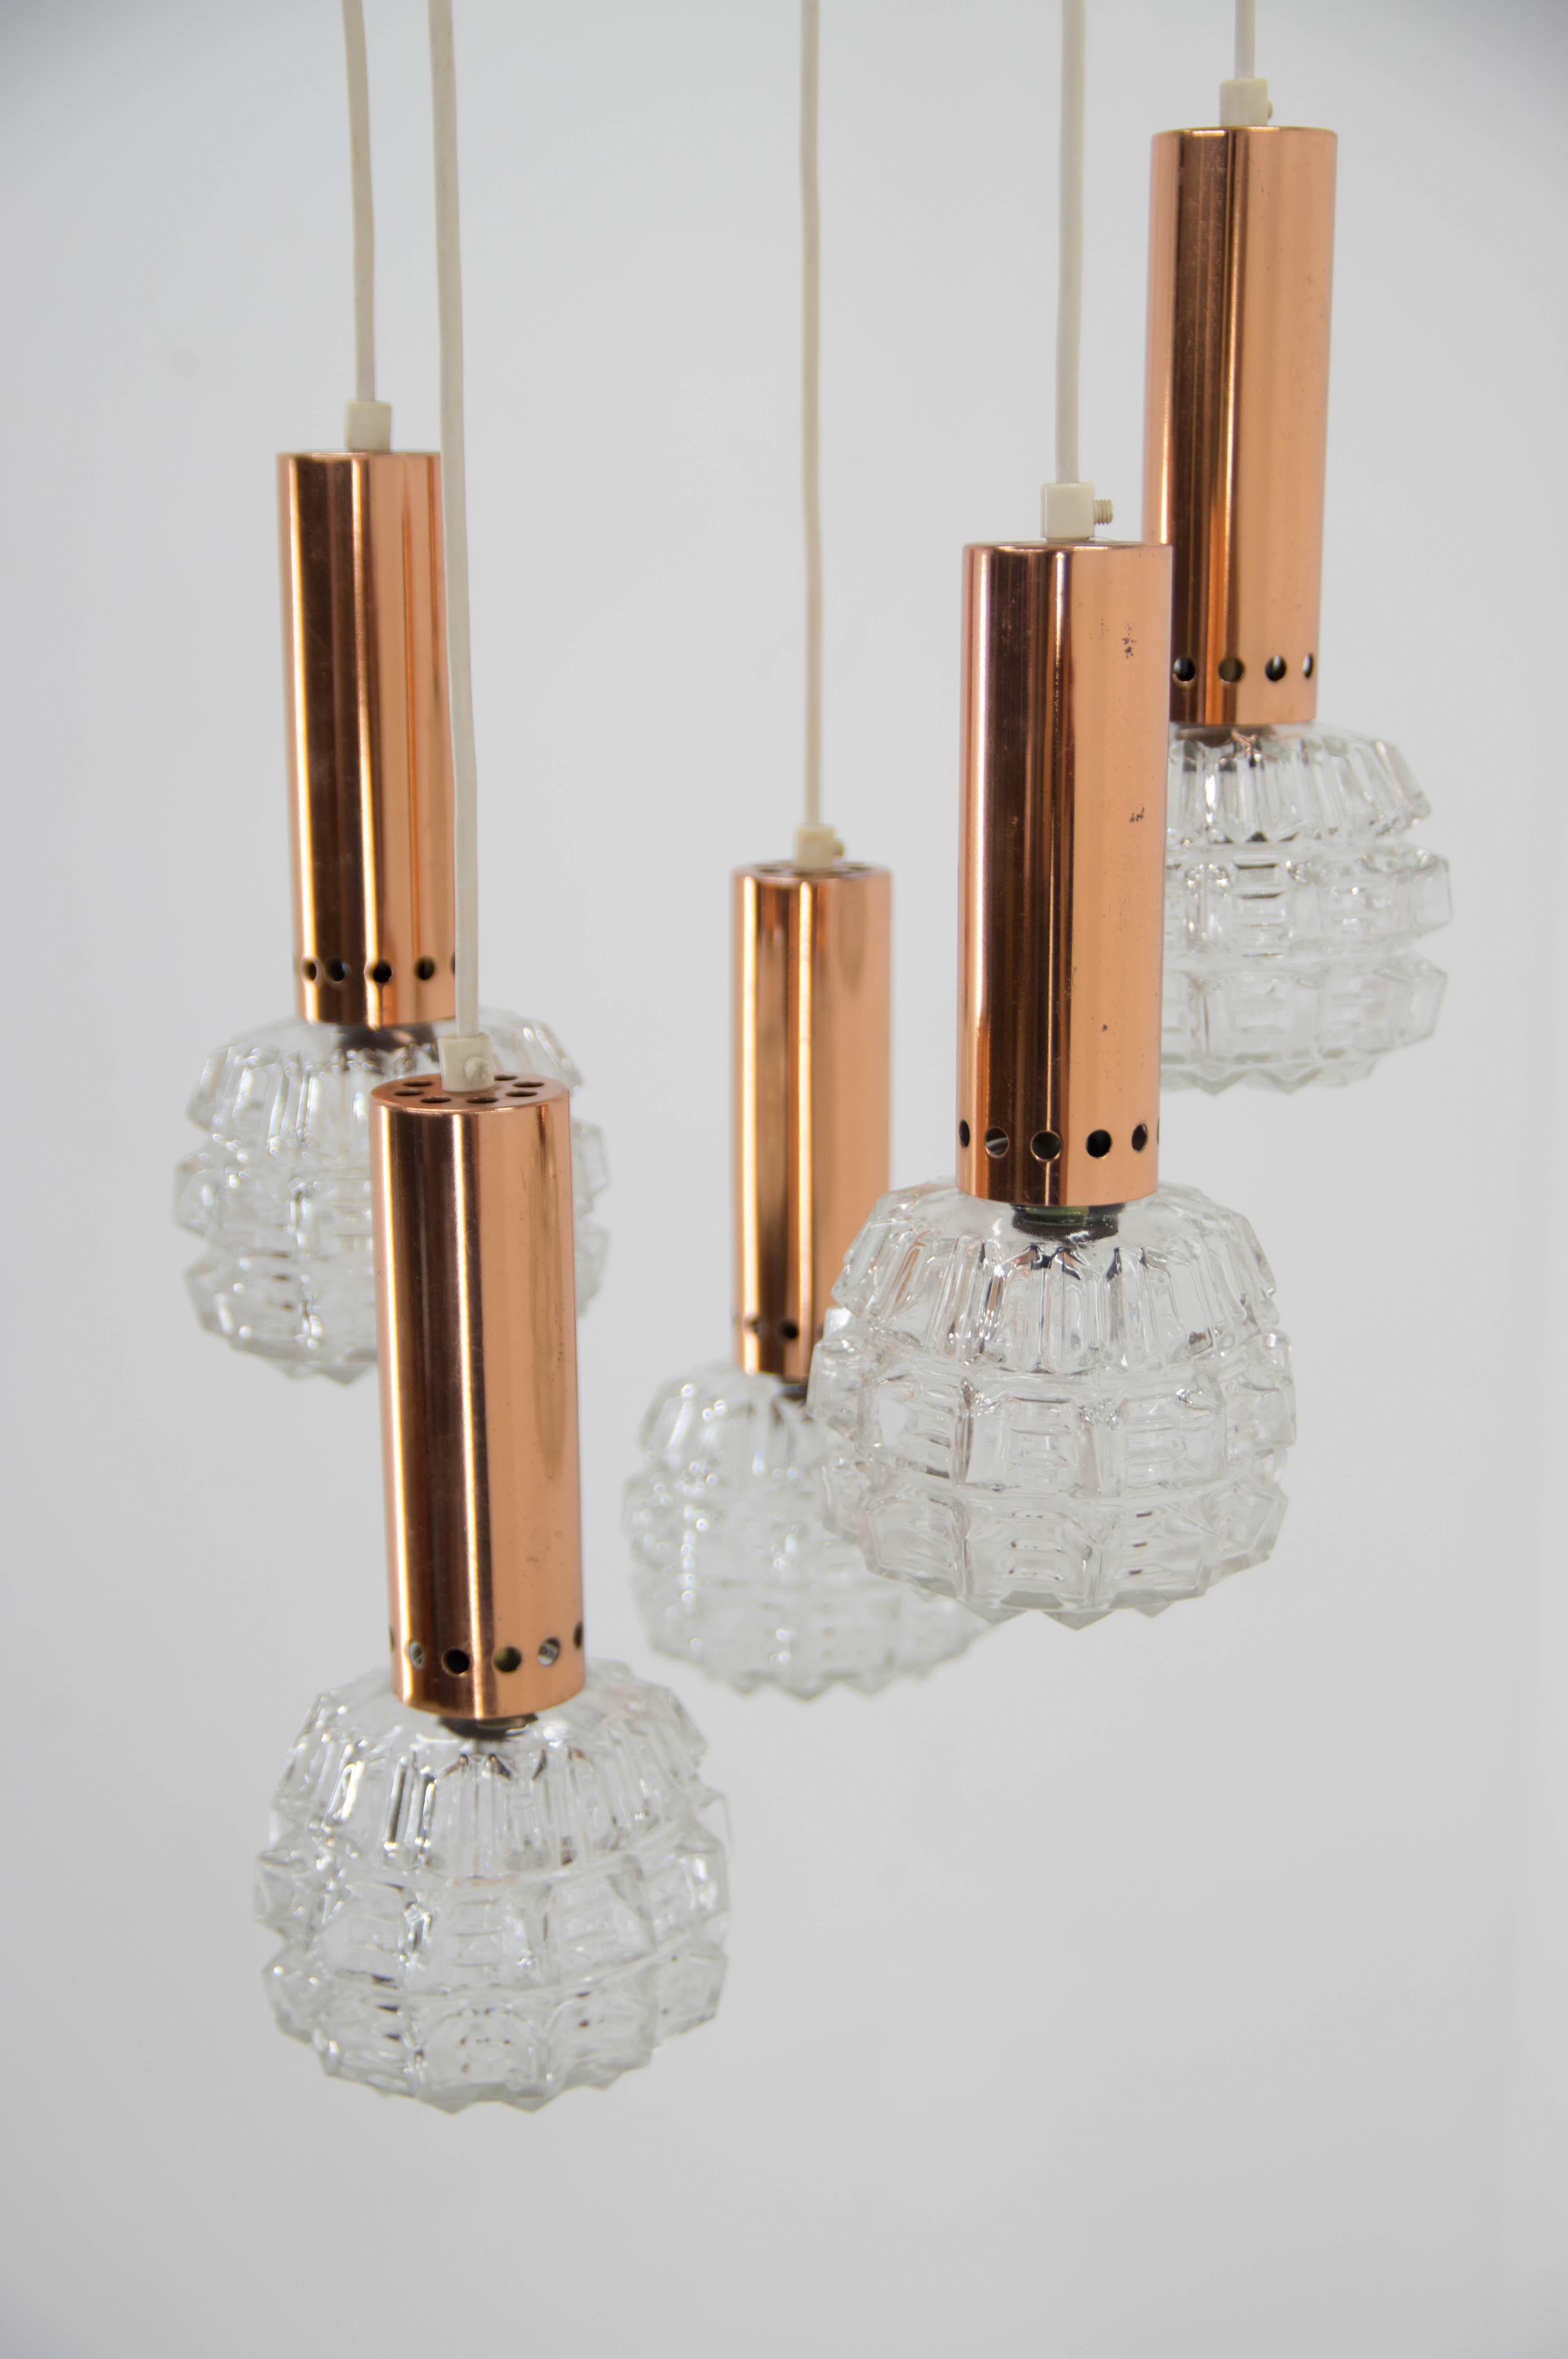 5-flamming chandelier made by Elektroinstala Decin
5x40W, E14-E15 bulbs
US wiring compatible.